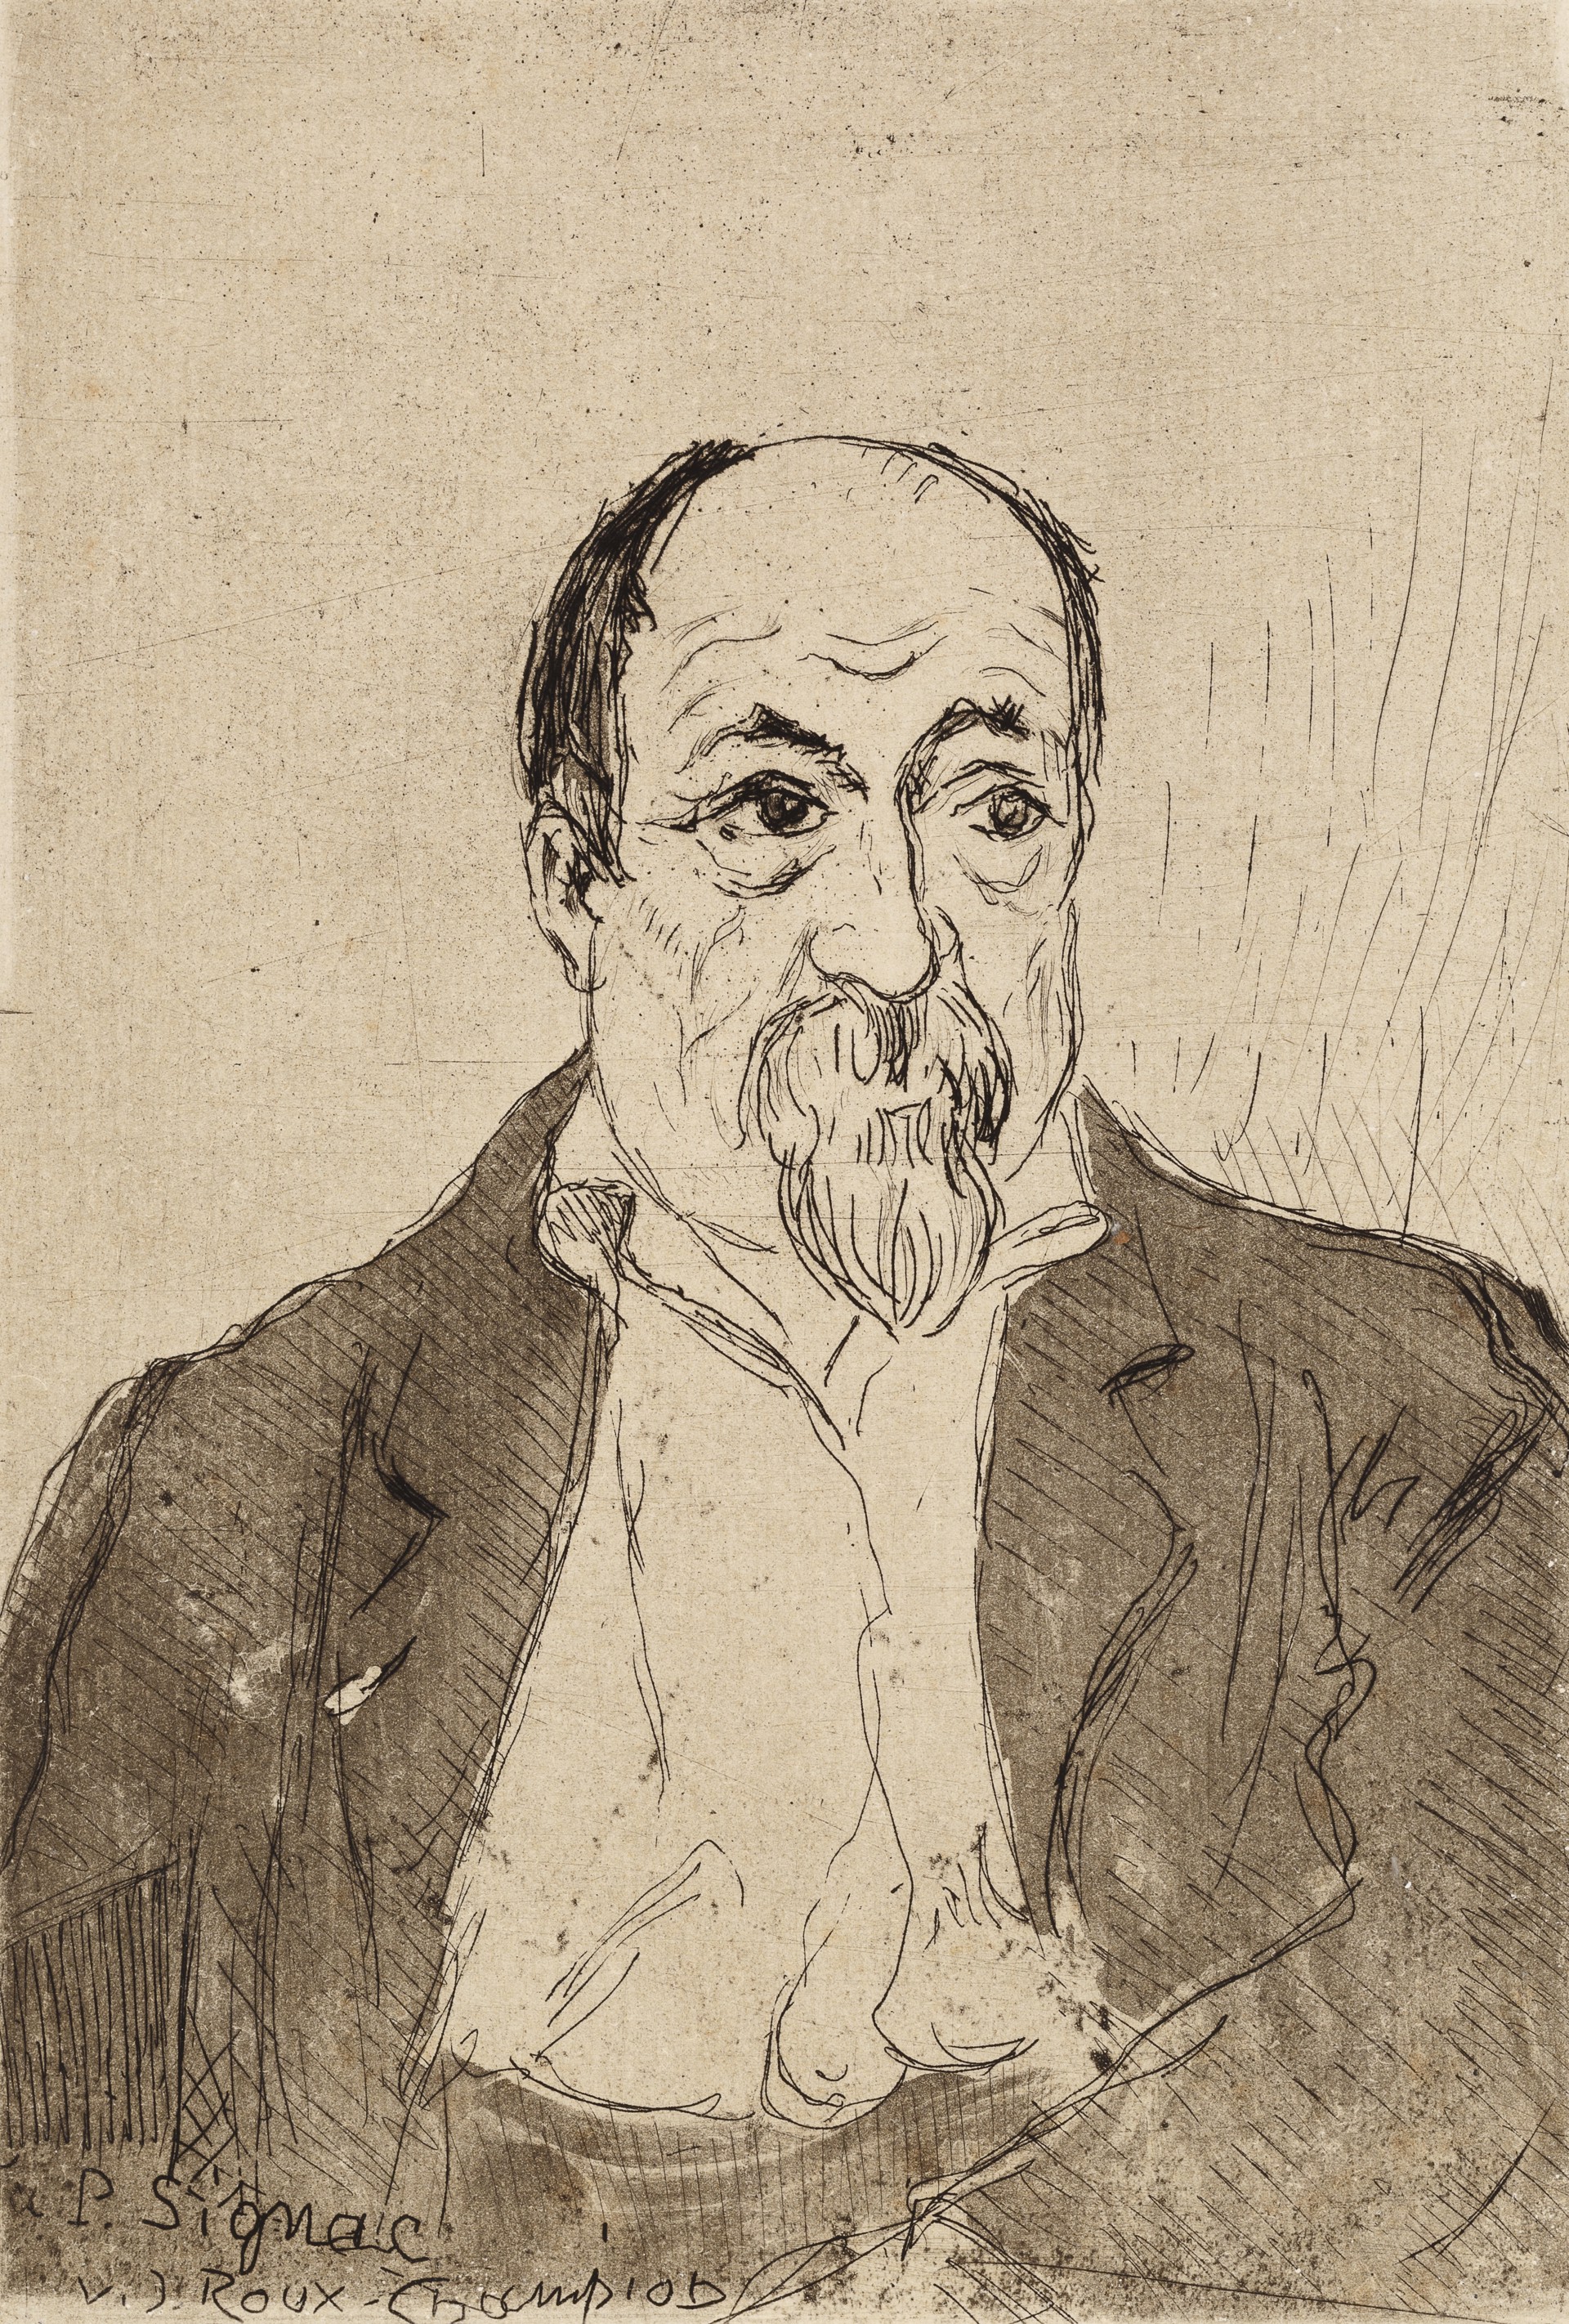 Portrait of Paul Signac by Joseph Victor Roux Champion